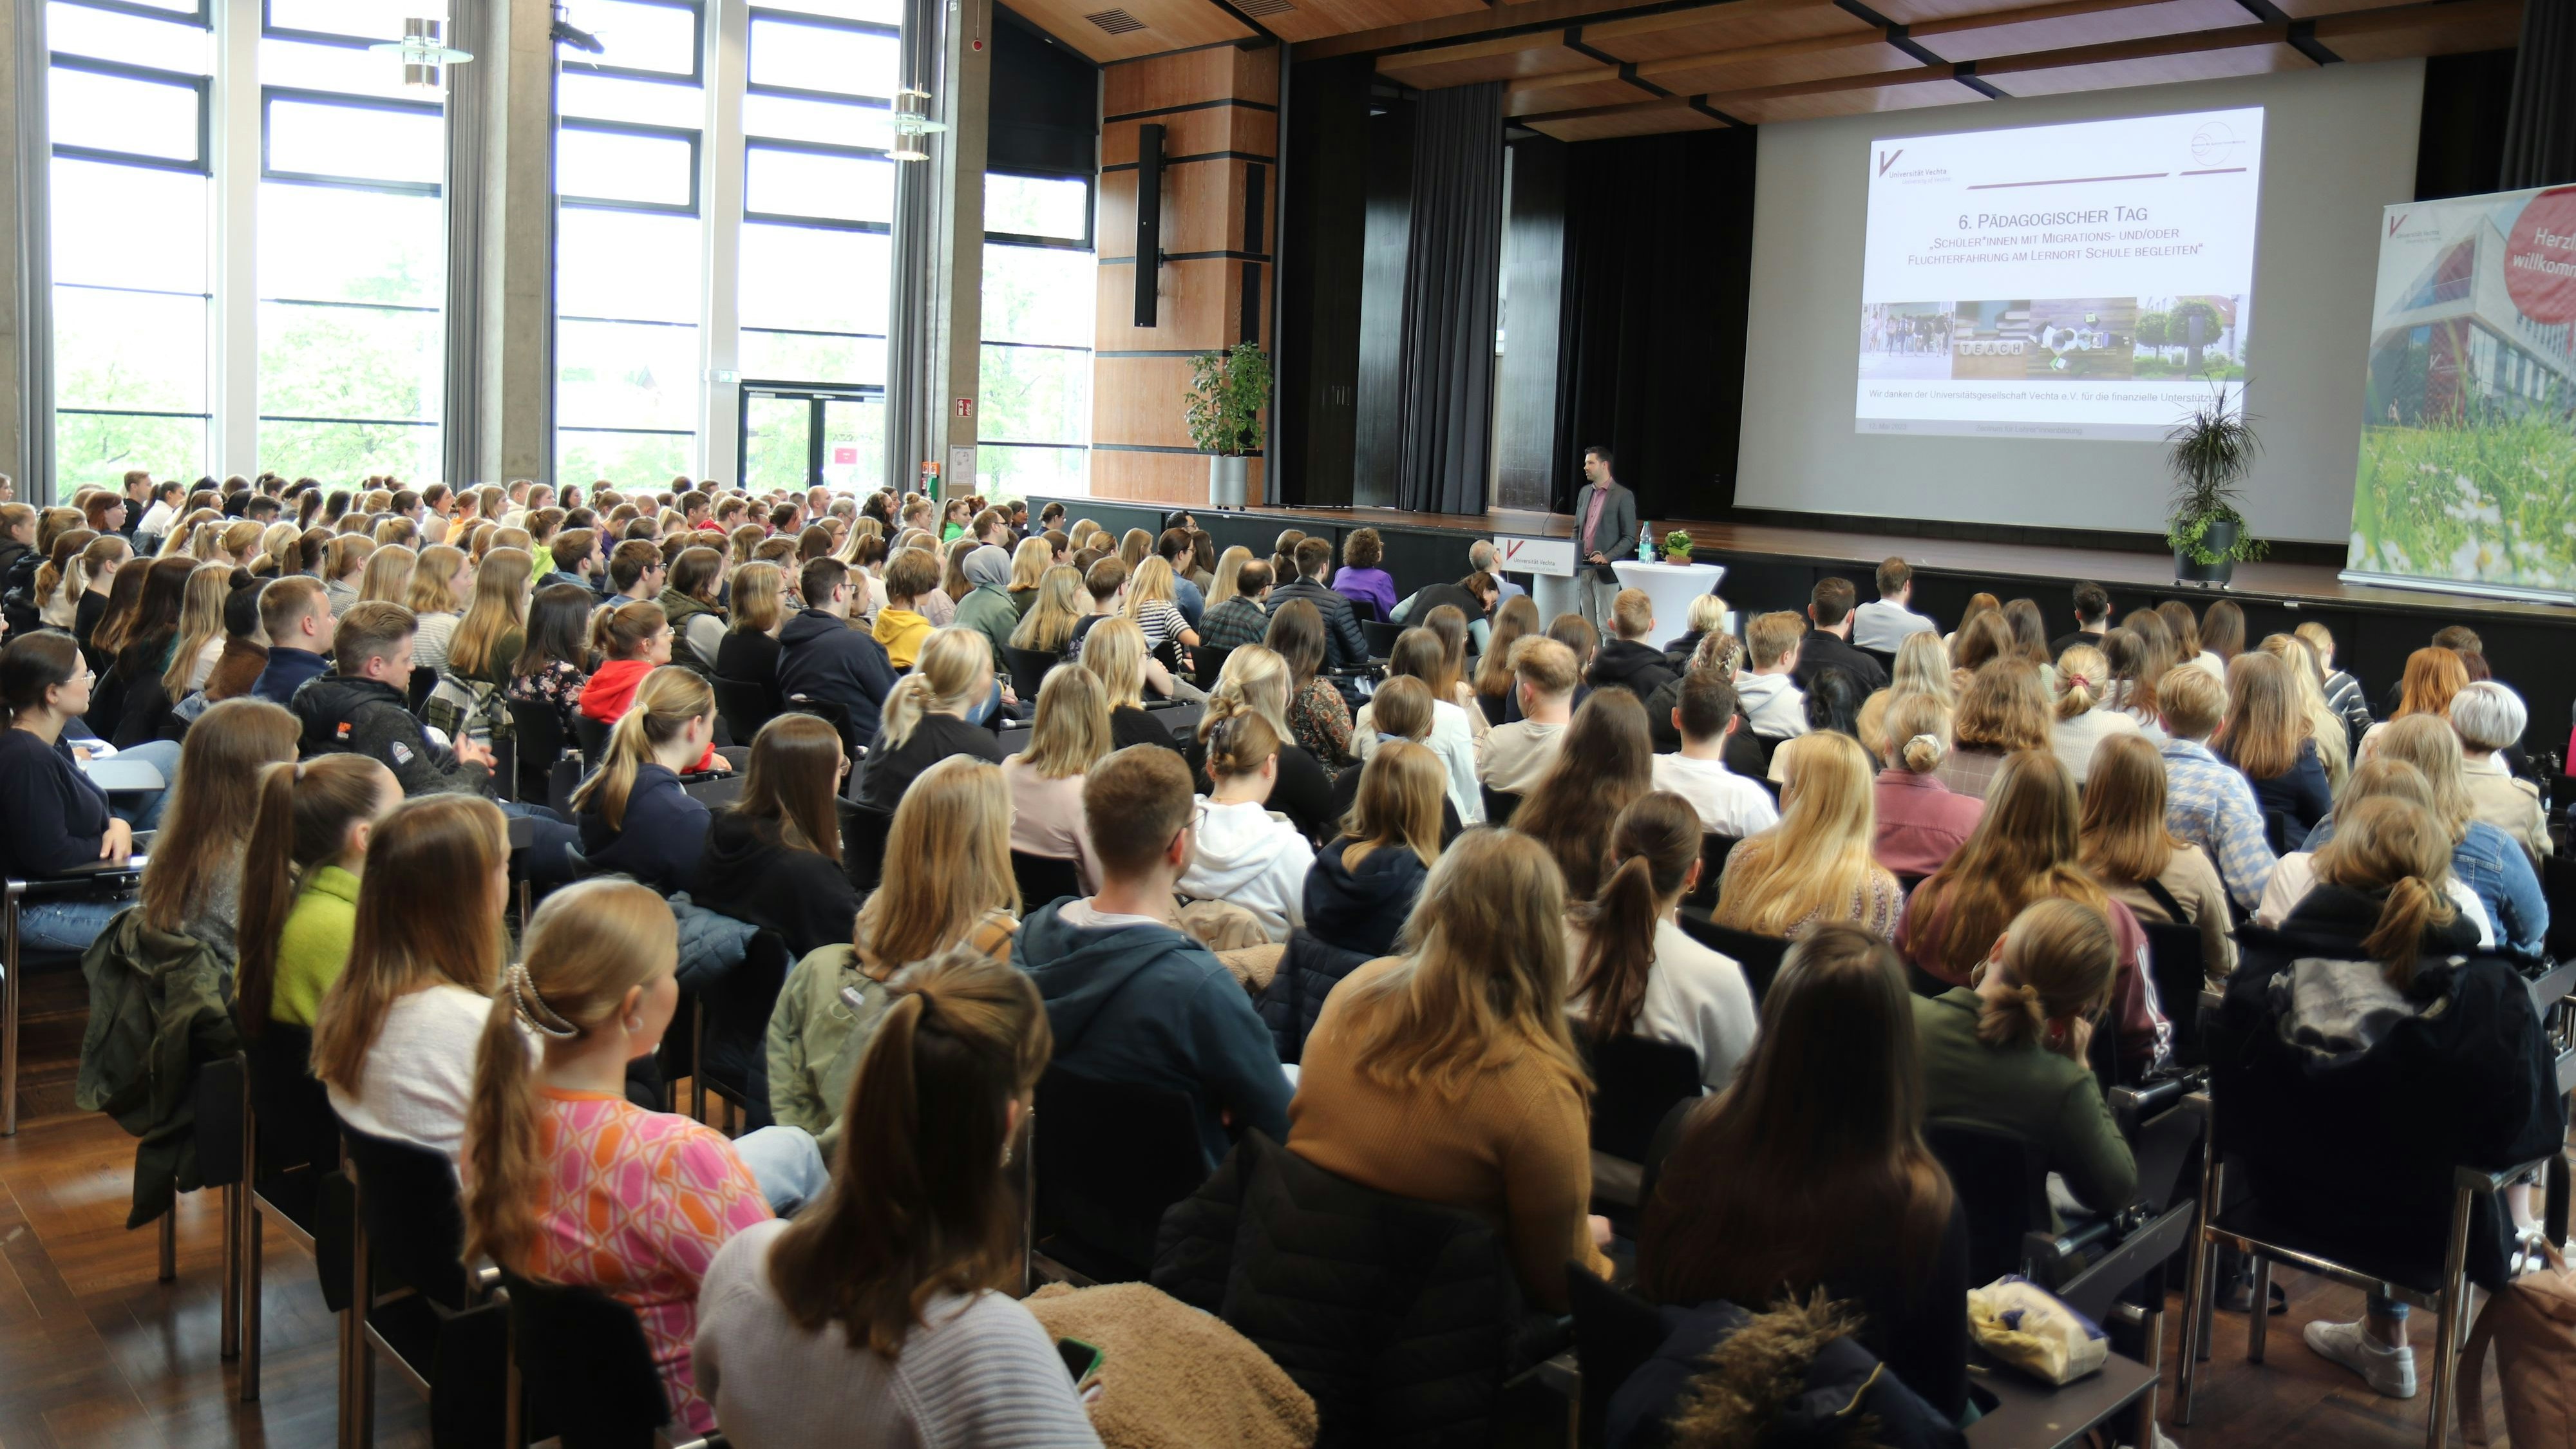 Voller Hörsaal: Der Pädagogische Tag der Universität Vechta fand großes Interesse. Foto: Universität Vechta/Schmidt